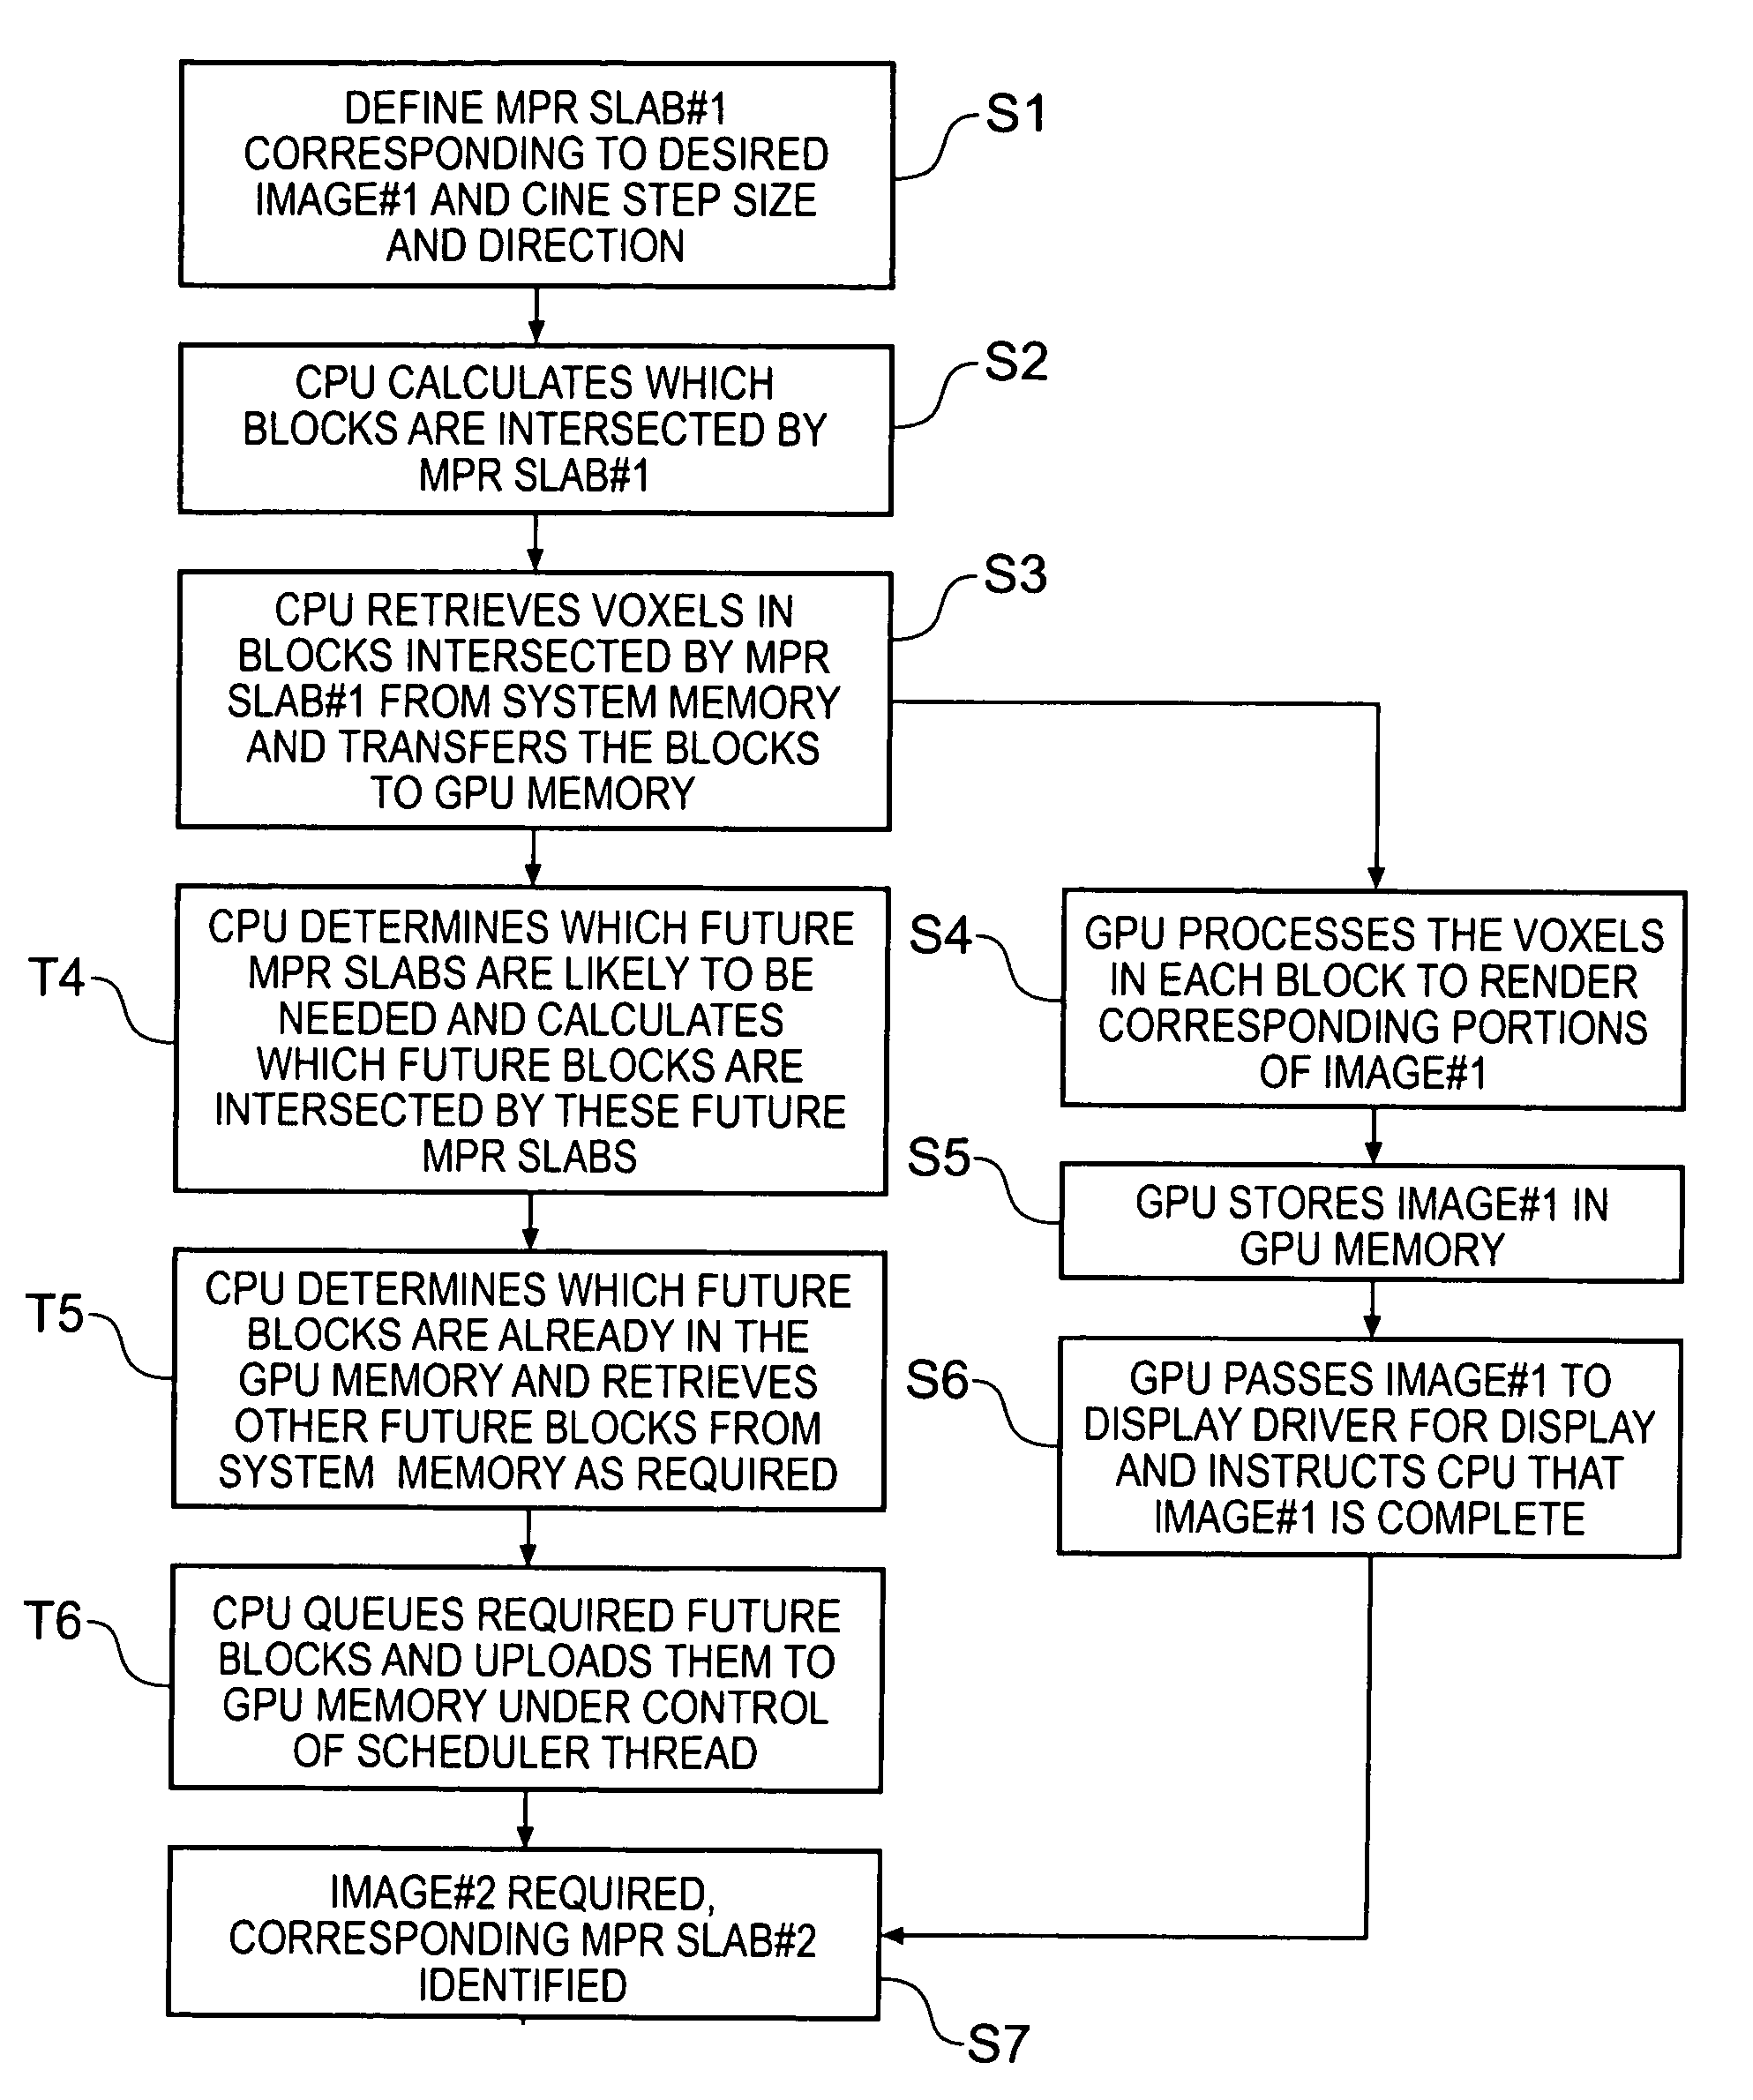 Volume rendering apparatus and method